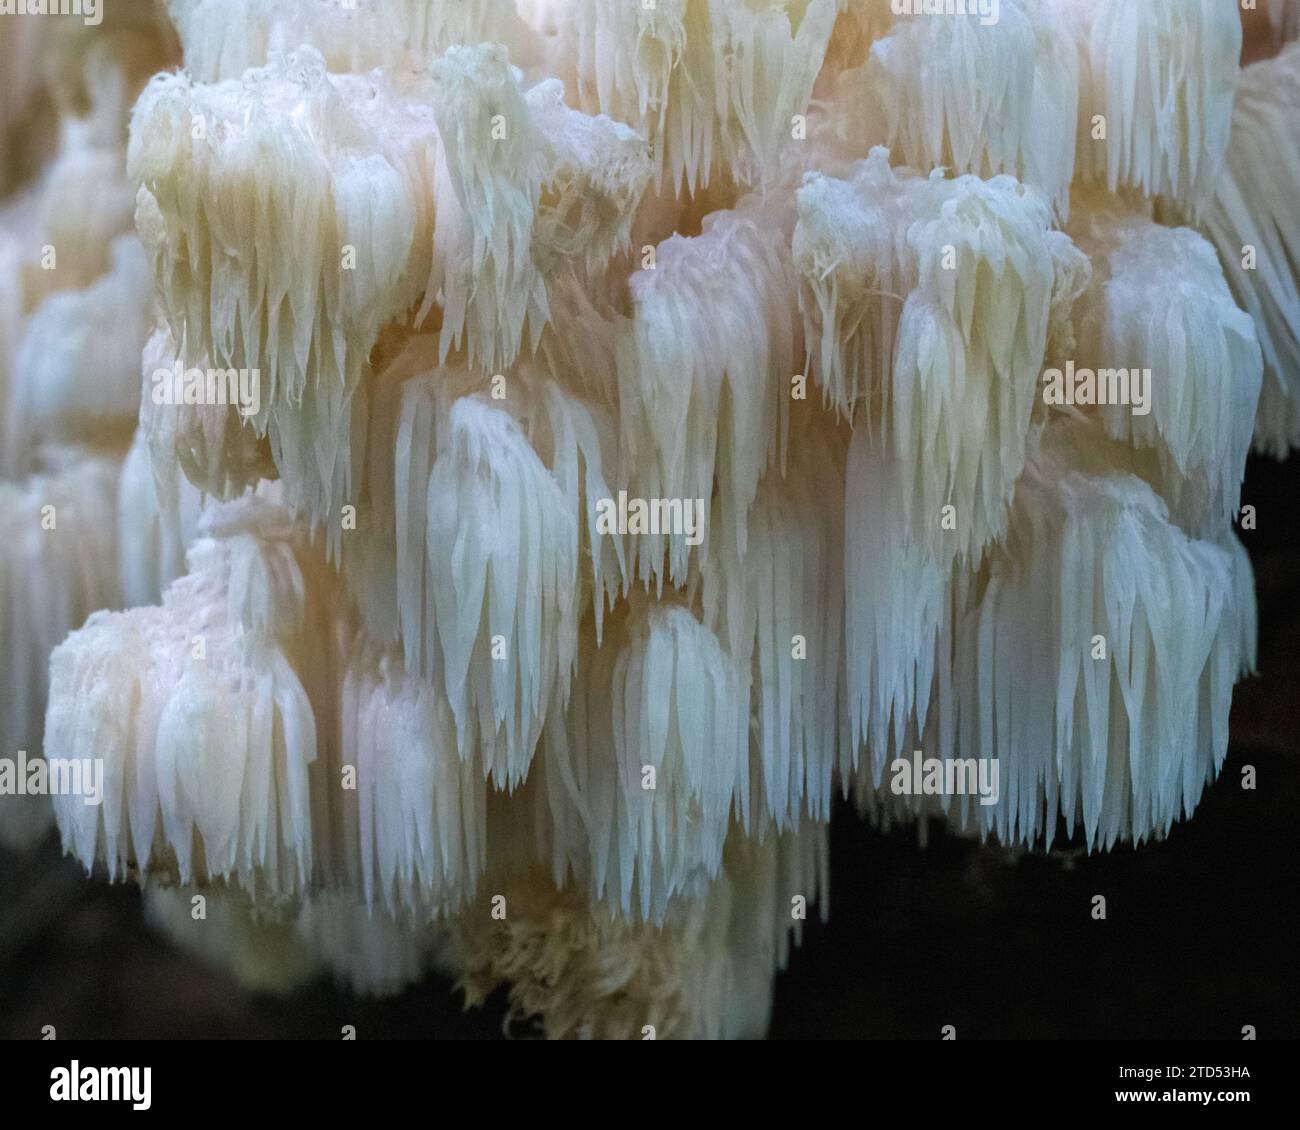 Closeup view of white tooth fungus mushroom hericium americanum Stock Photo